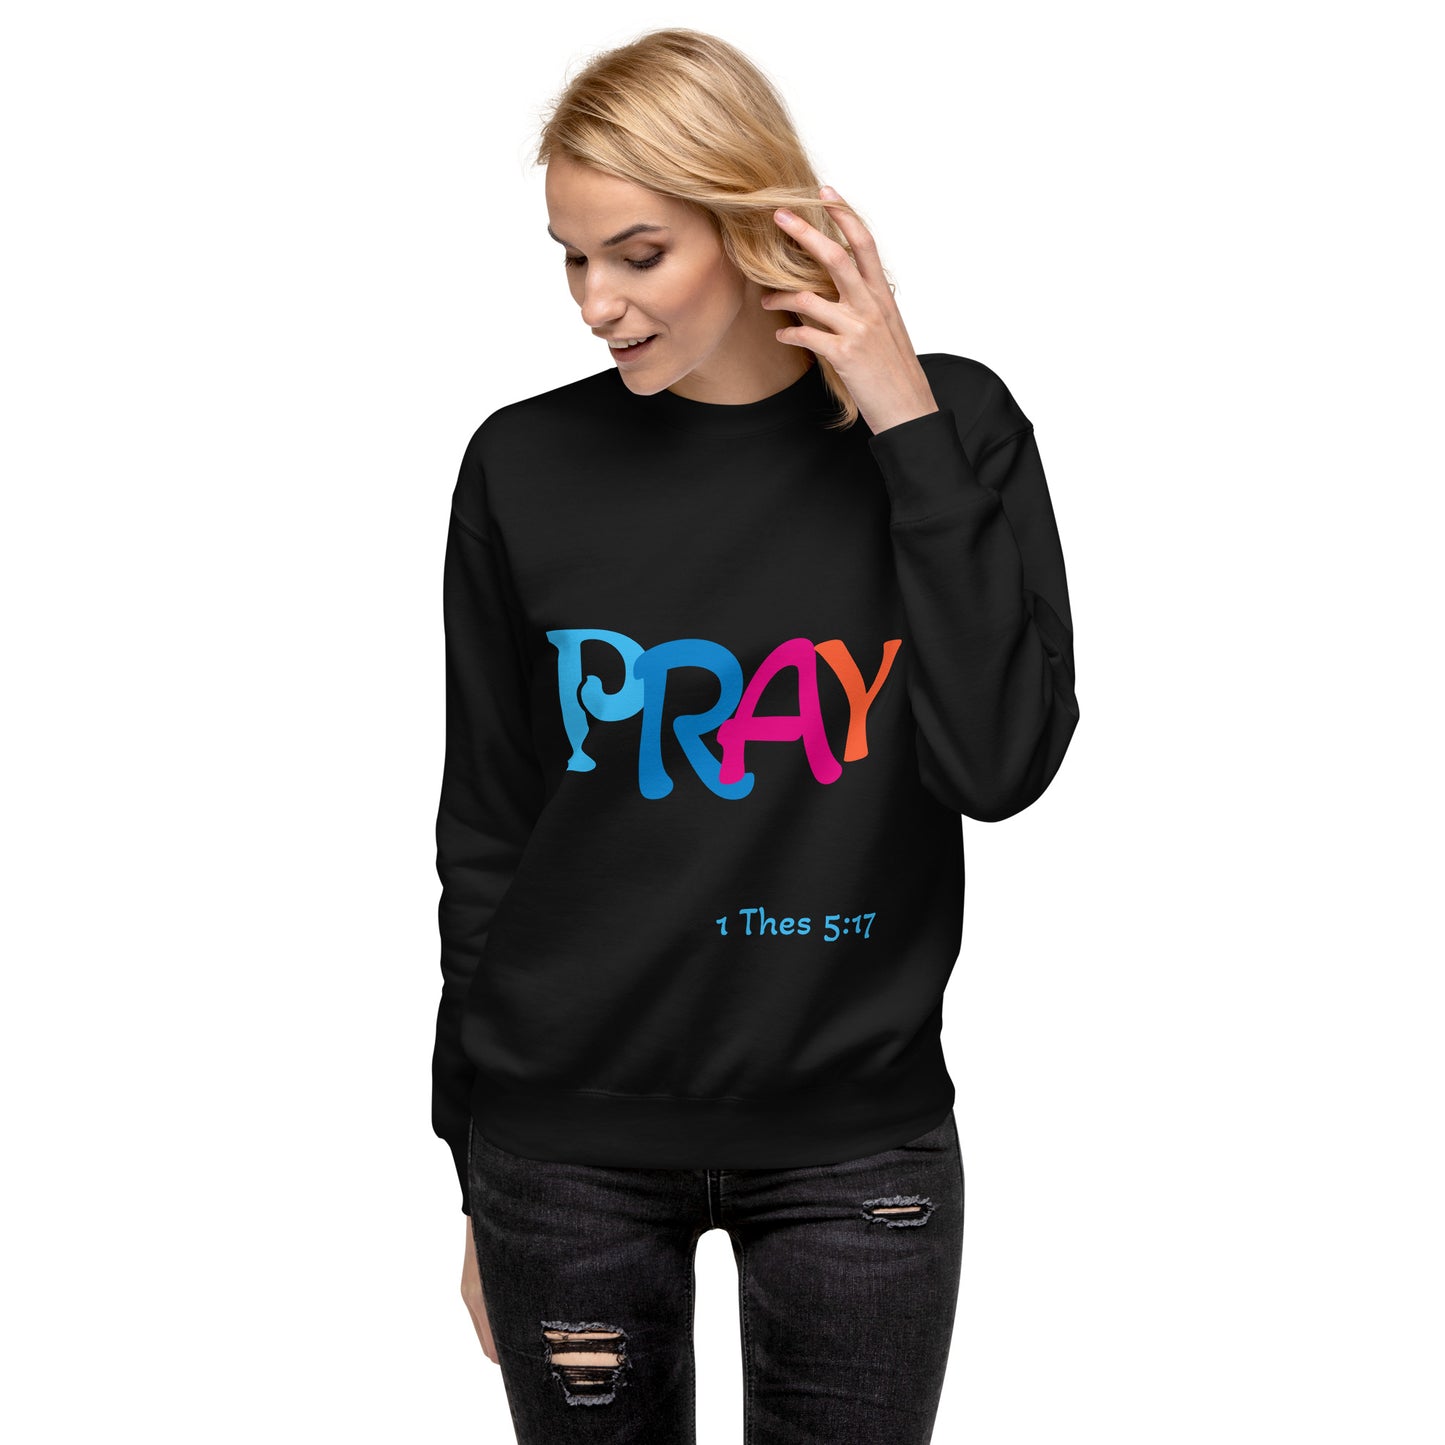 ‘PRAY’ Unisex Premium Sweatshirt